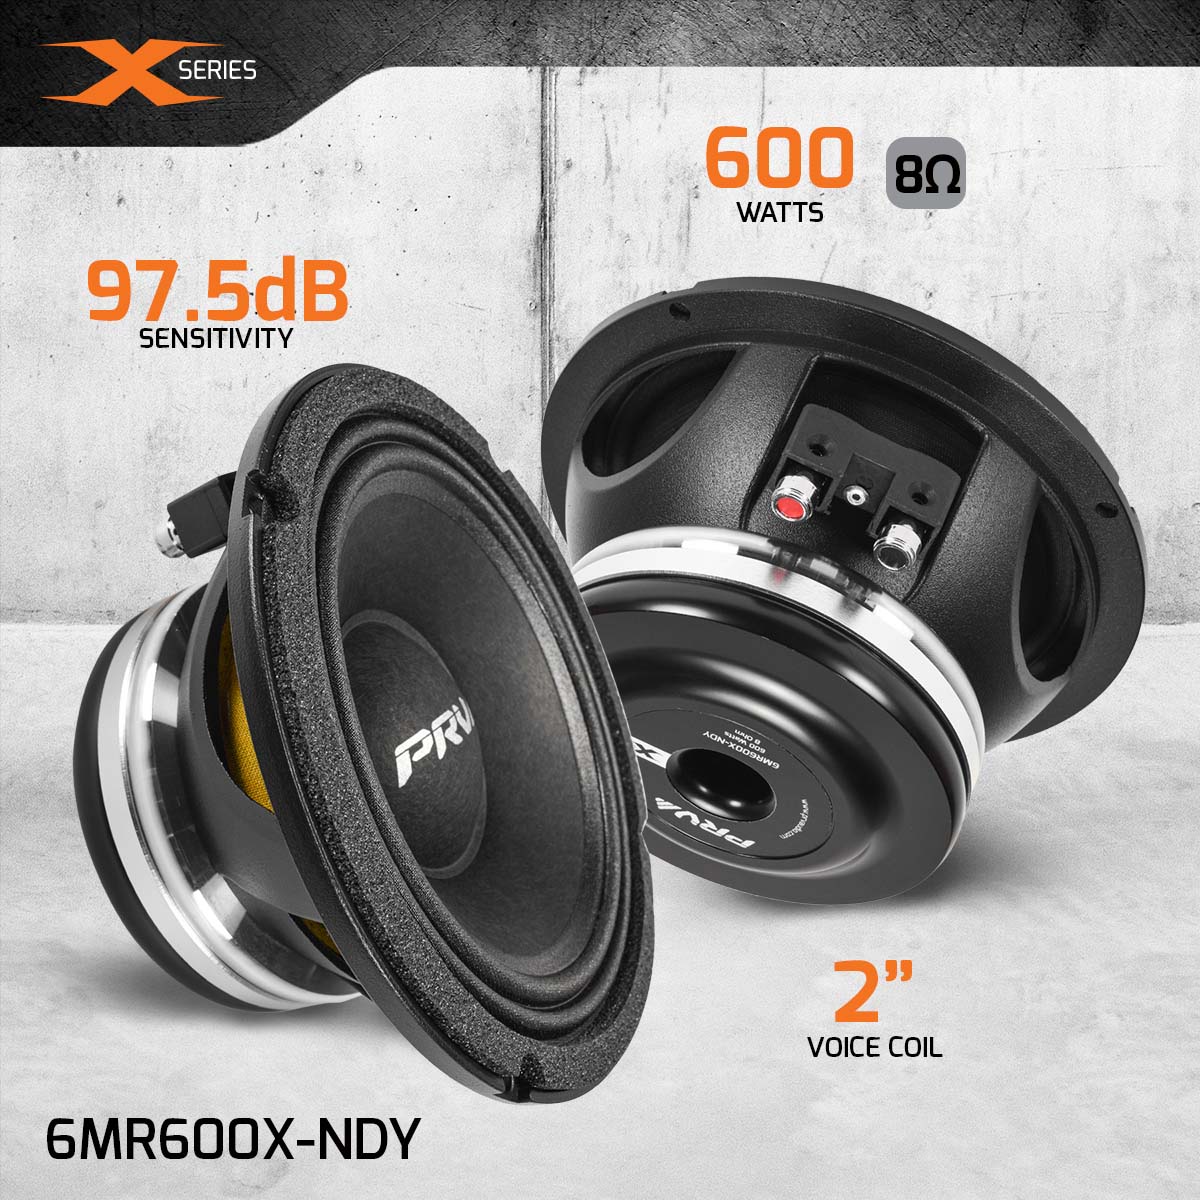 6MR600X-NDY -Specs - Infographic